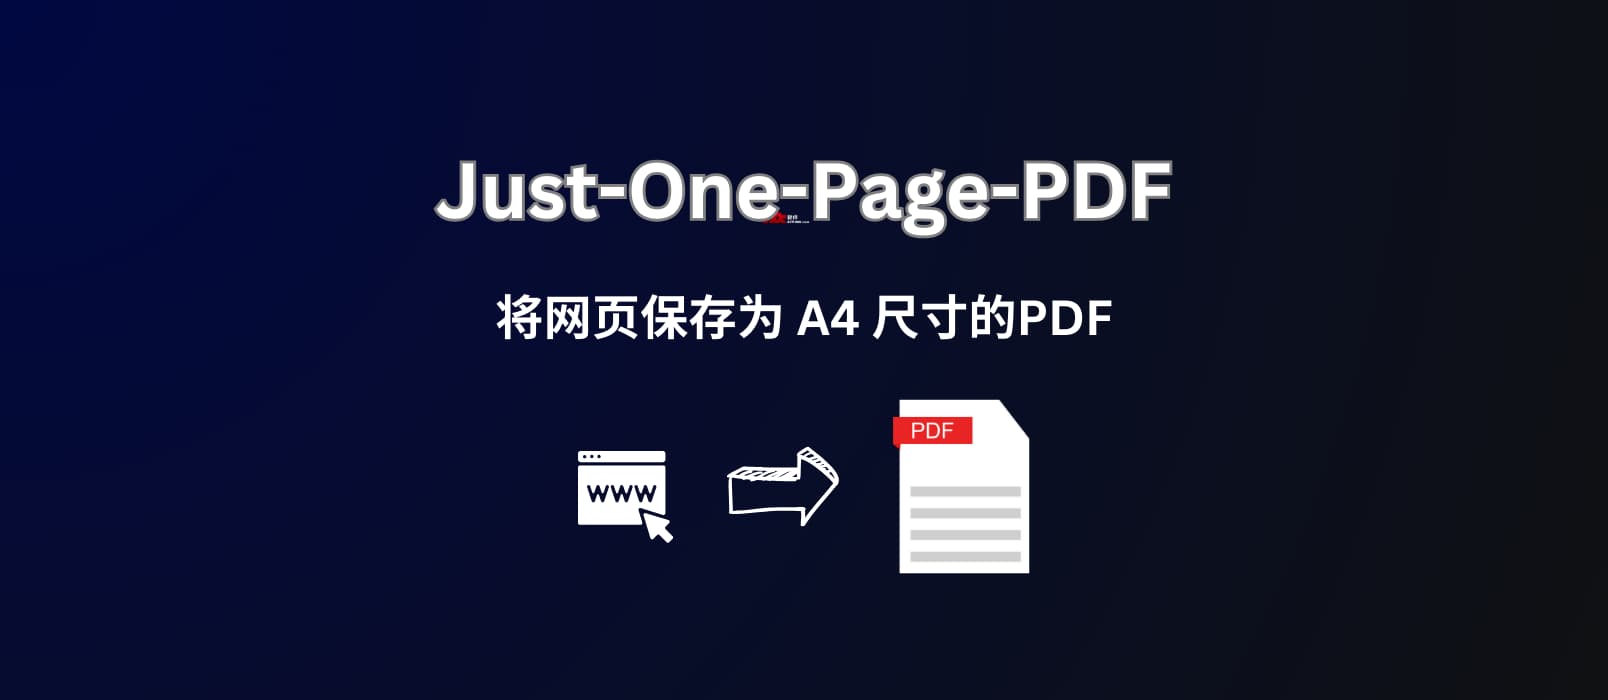 Just-One-Page-PDF - 将网页保存为 PDF：A4 尺寸，支持保存为一页或多页 PDF[Chrome] 20